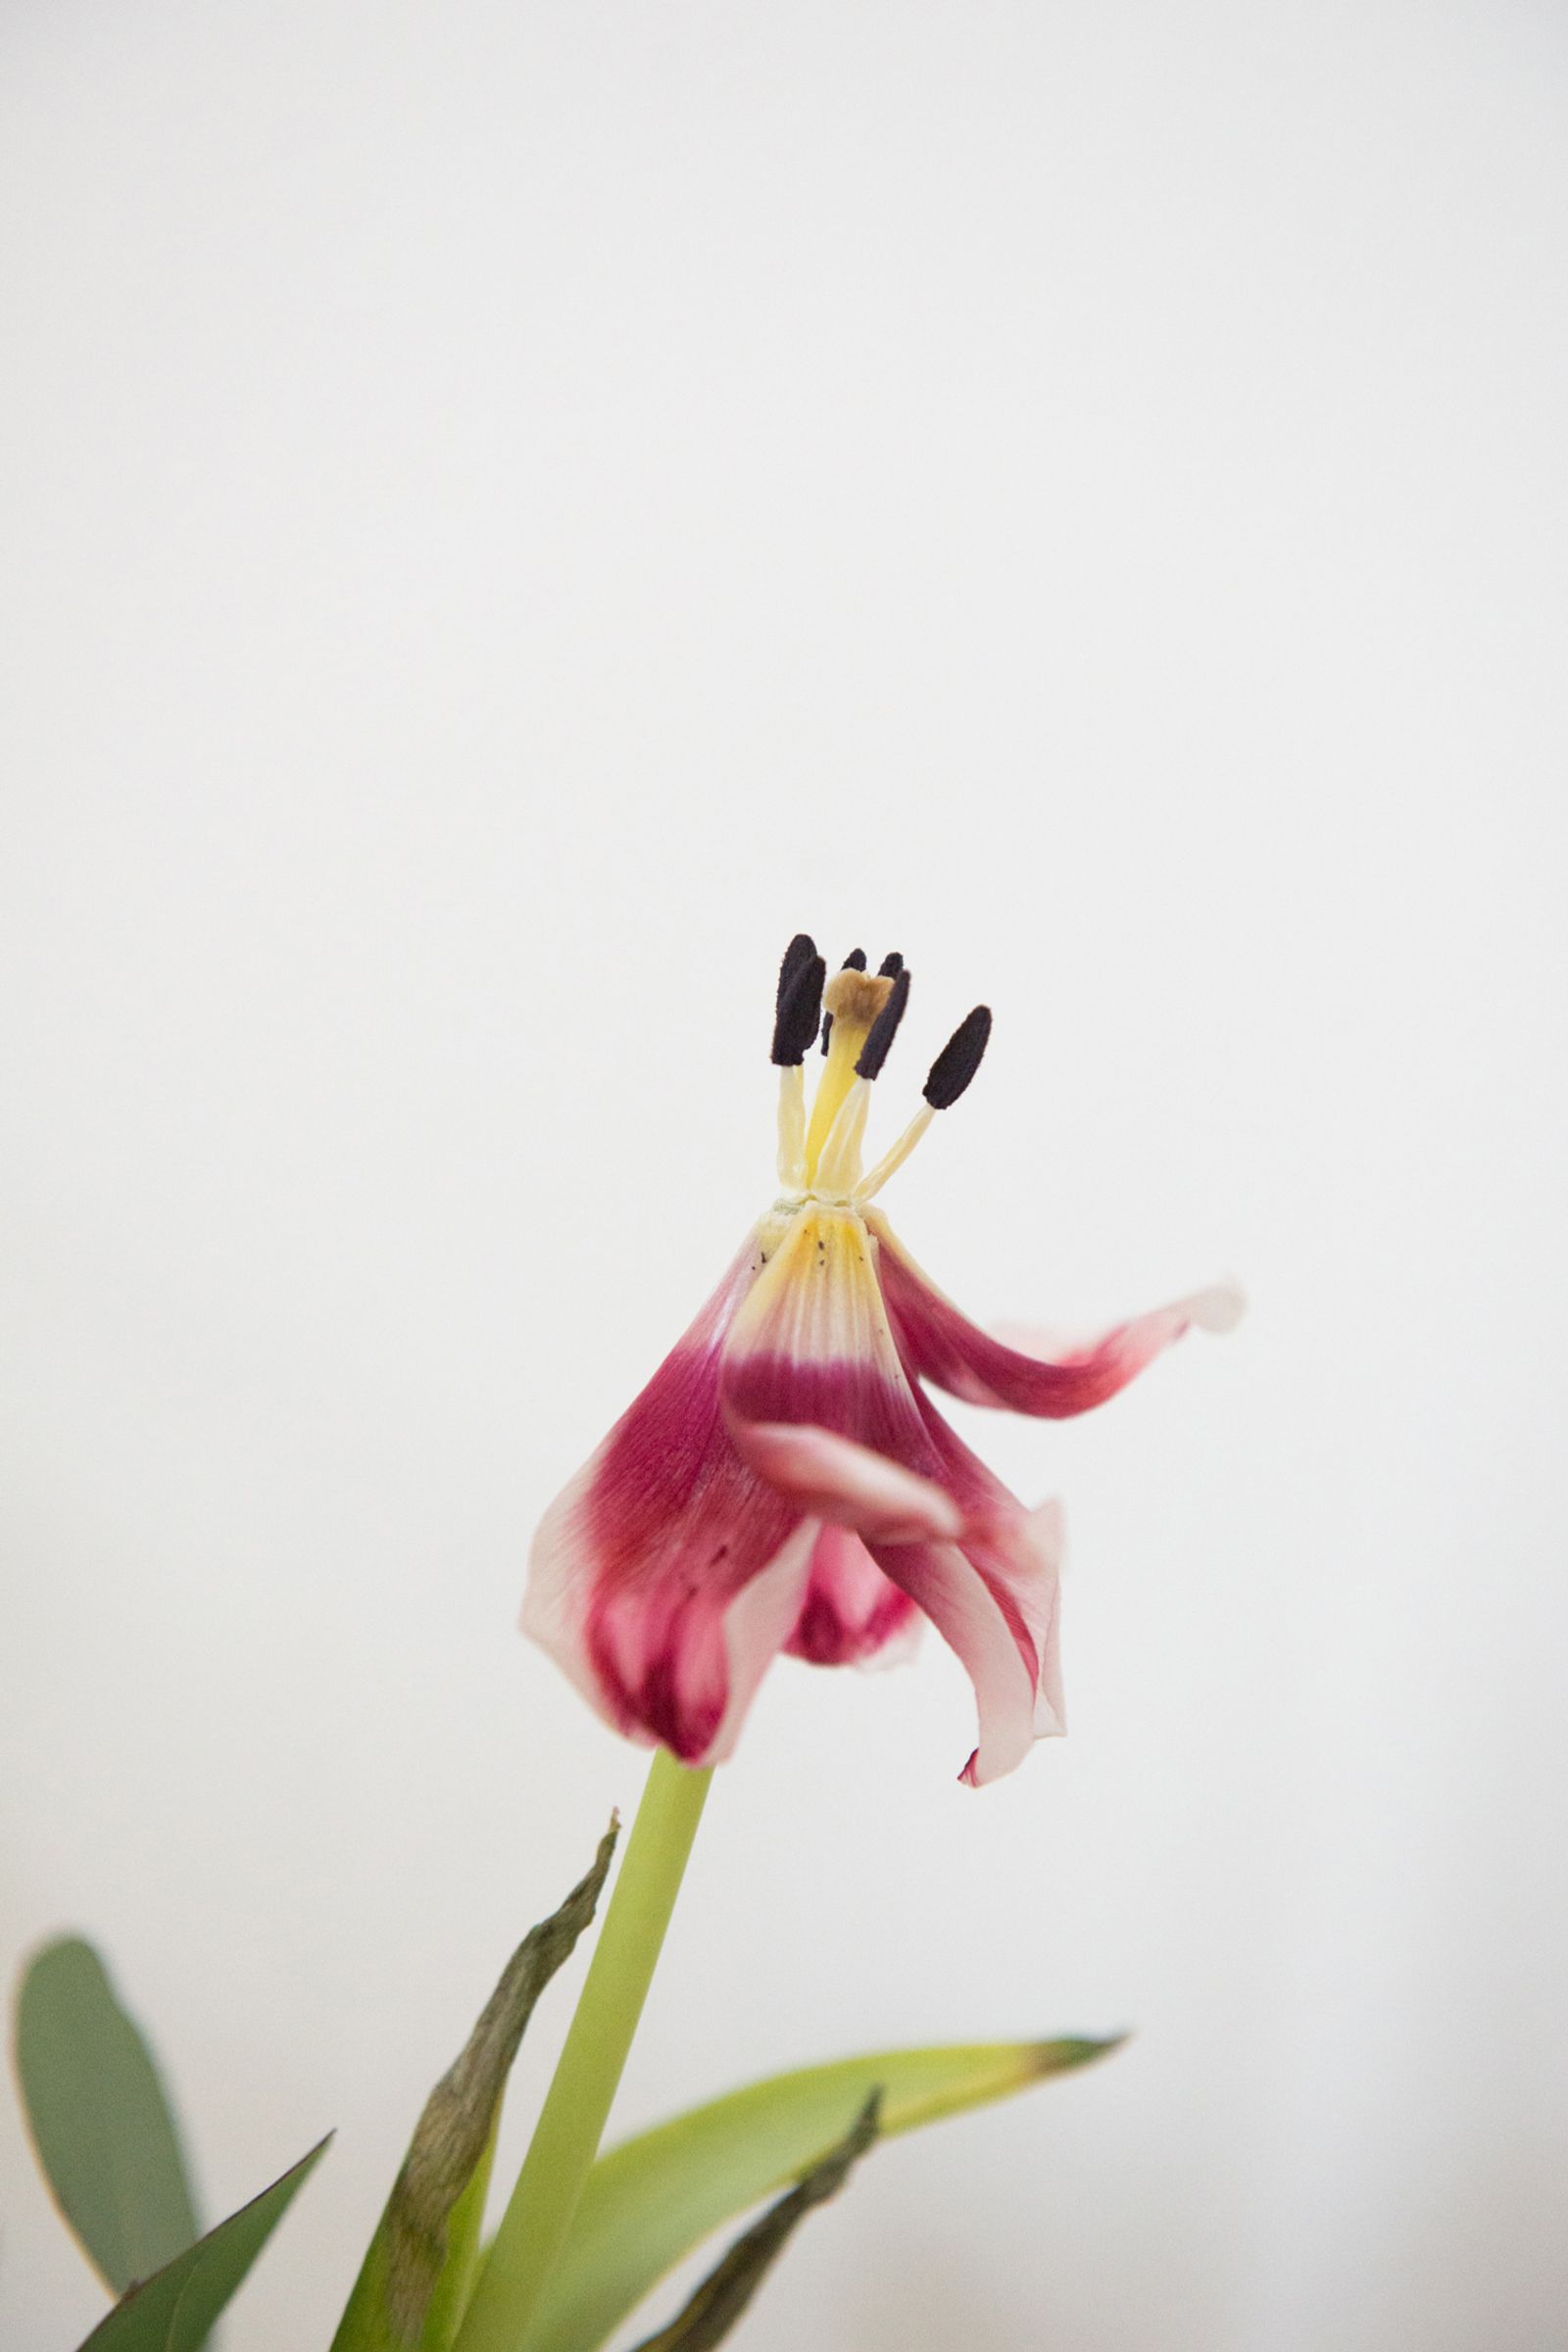 © Francesca Cirilli - Blooming and fading (Tulip II)